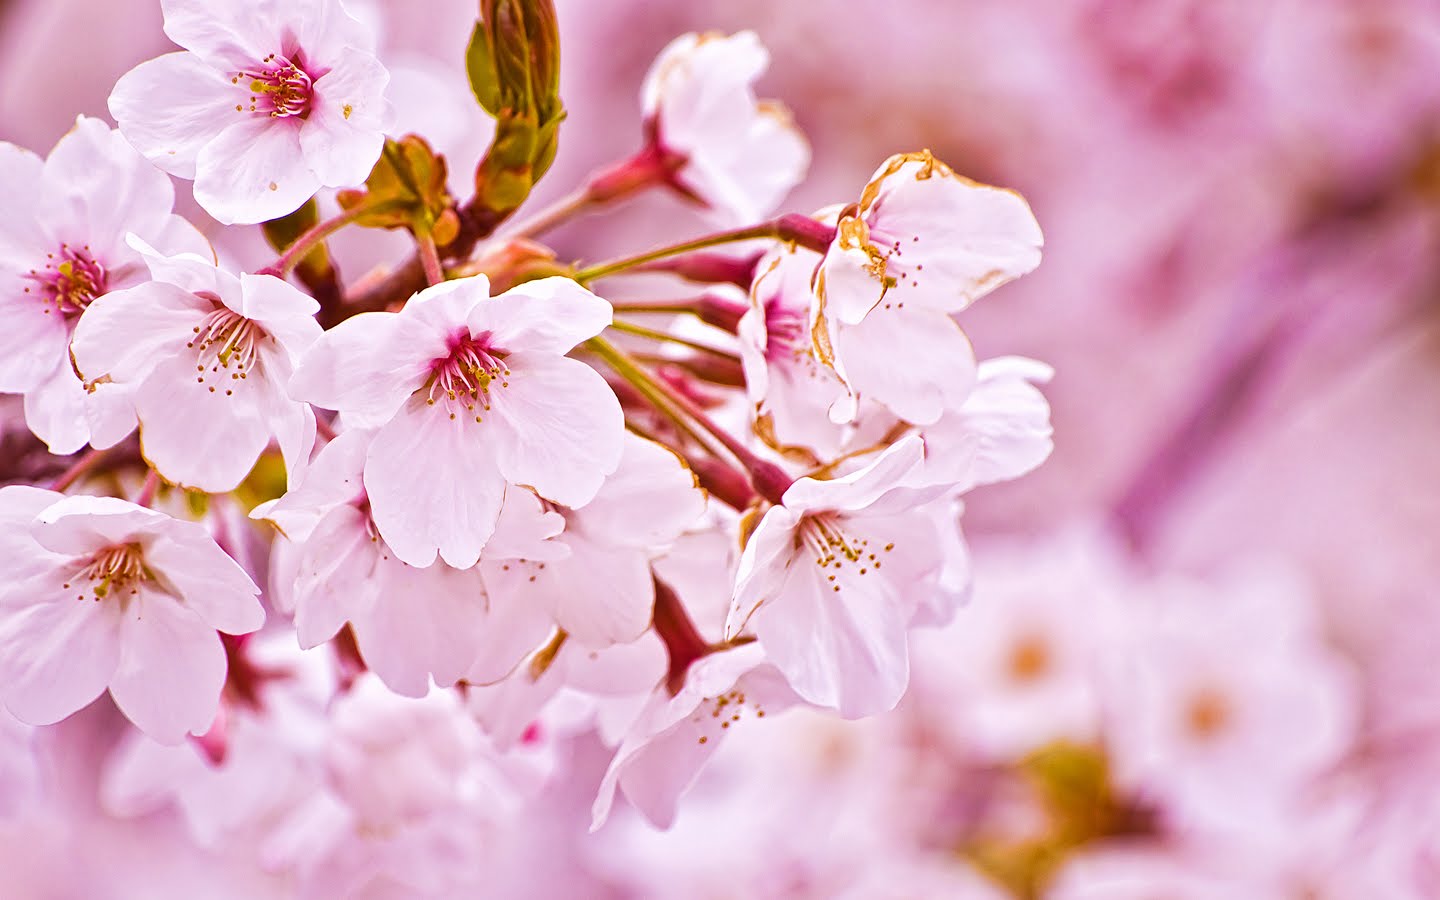 The cherry blossom sakura is